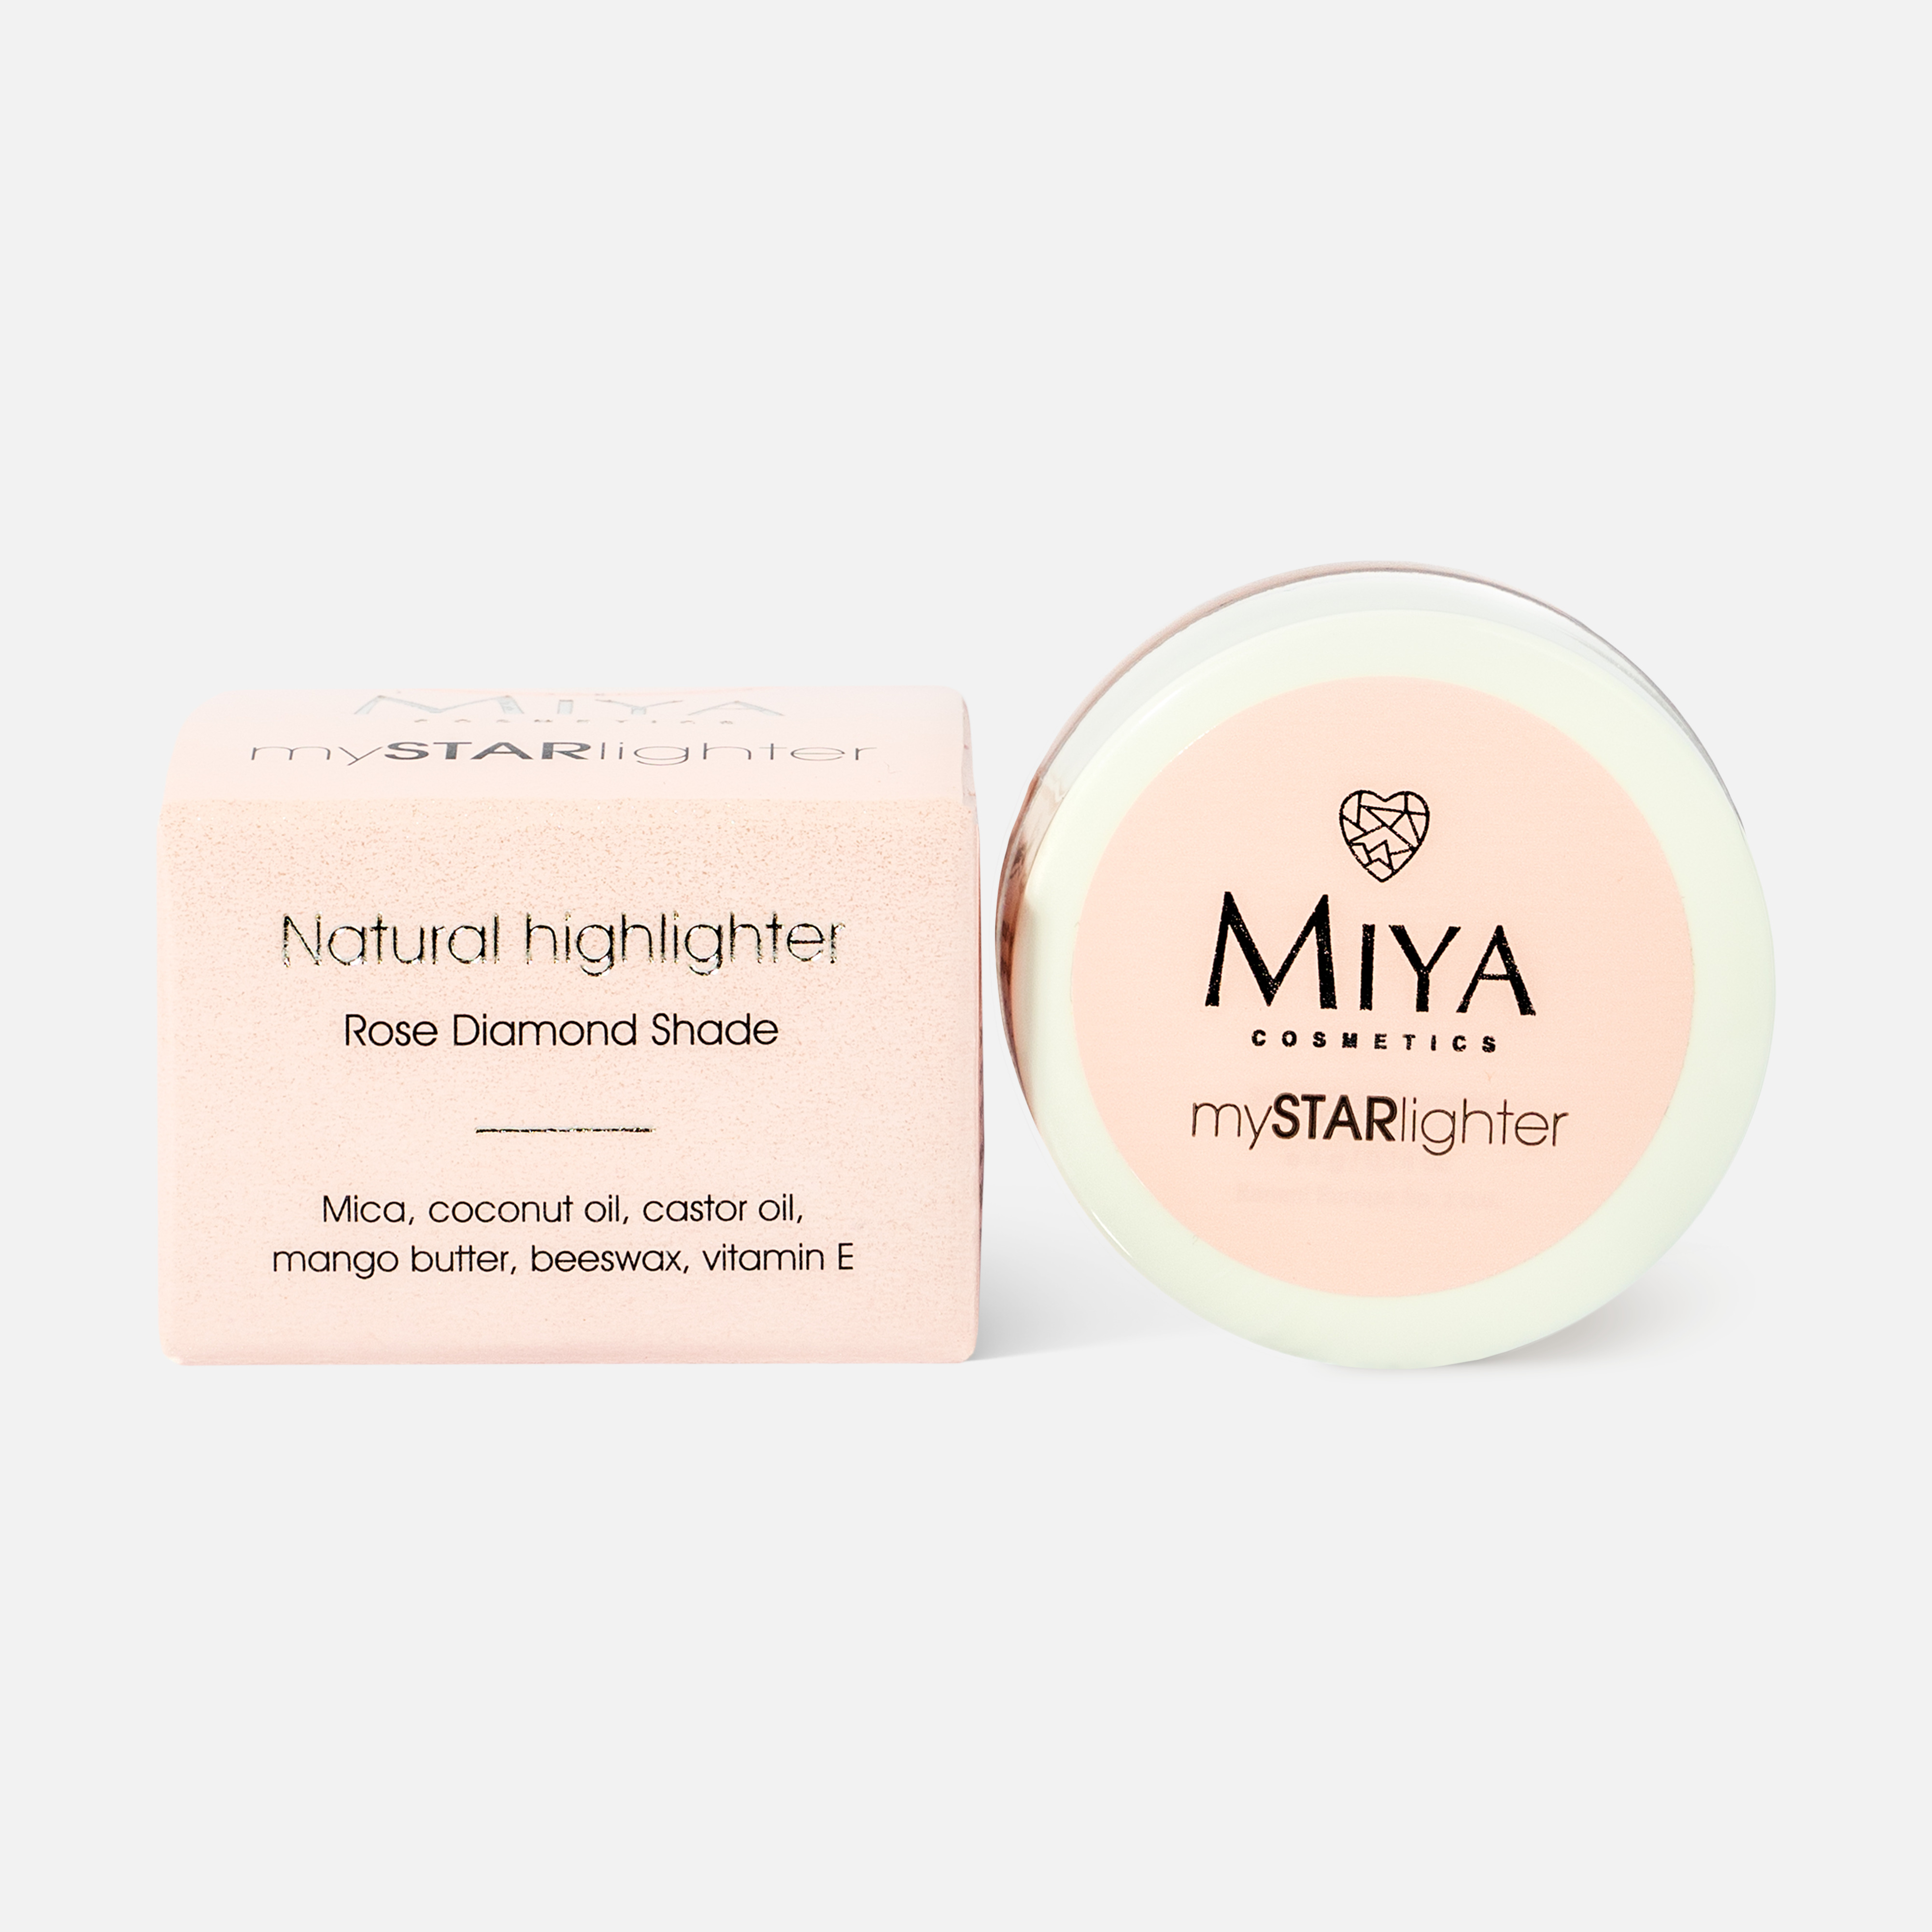 Хайлайтер для лица Miya cosmetics Mystarlighter Rose Diamond, 4 г ruby rose хайлайтер двойной duo highlighter